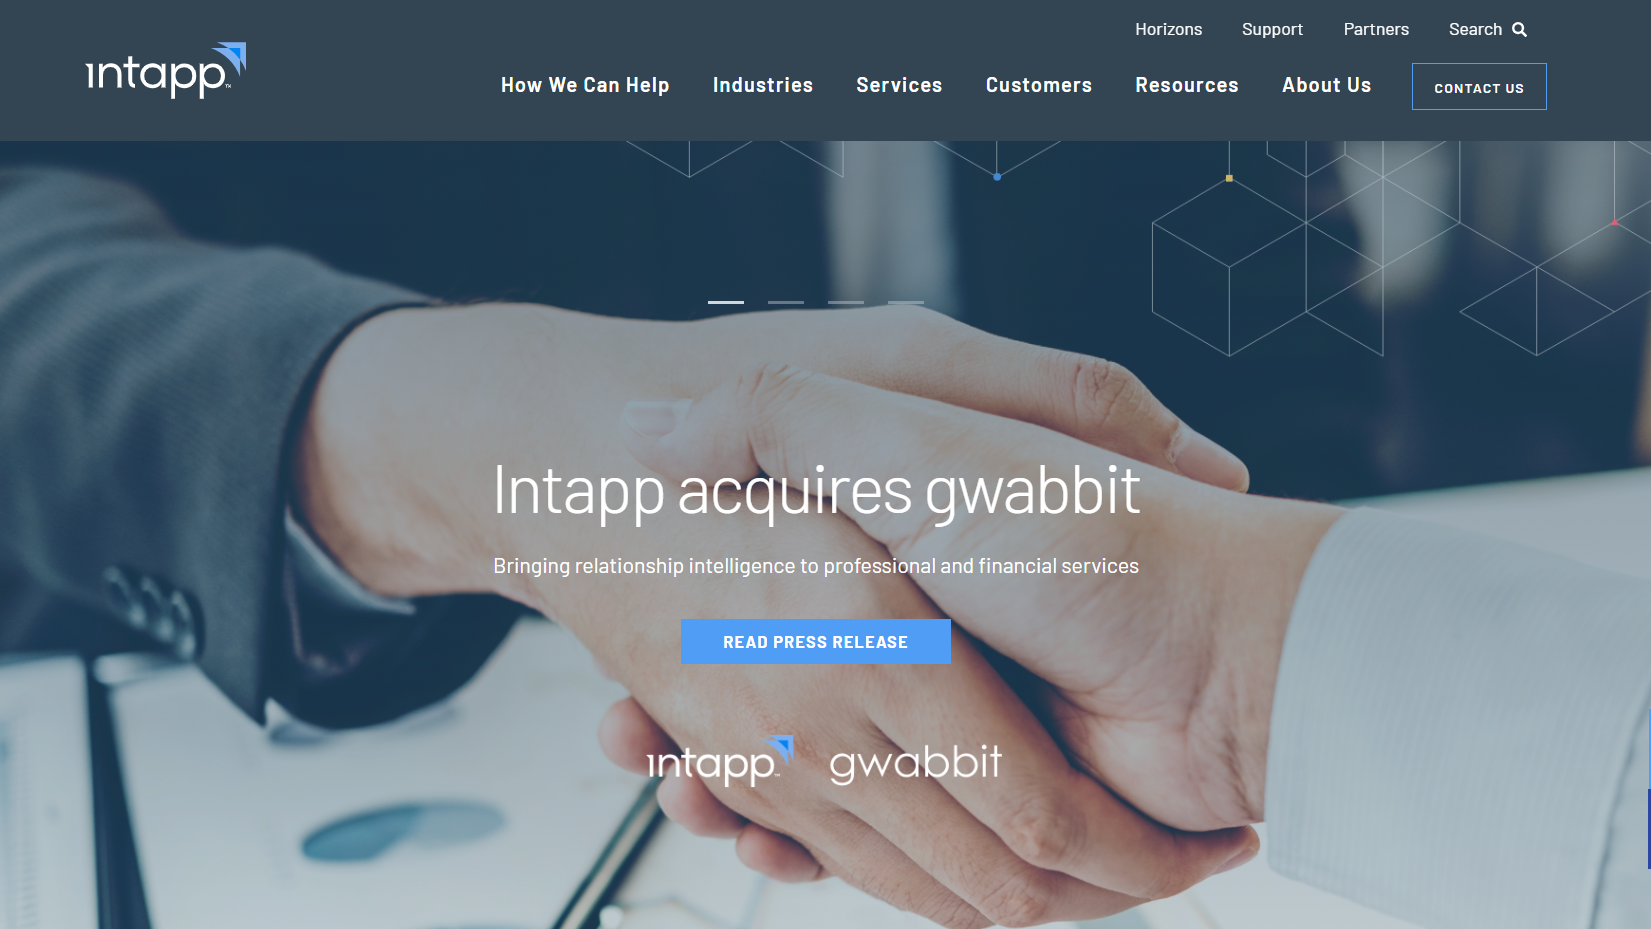 Intapp, Provider of Professional Services Software, Acquires ERM Platform gwabbit